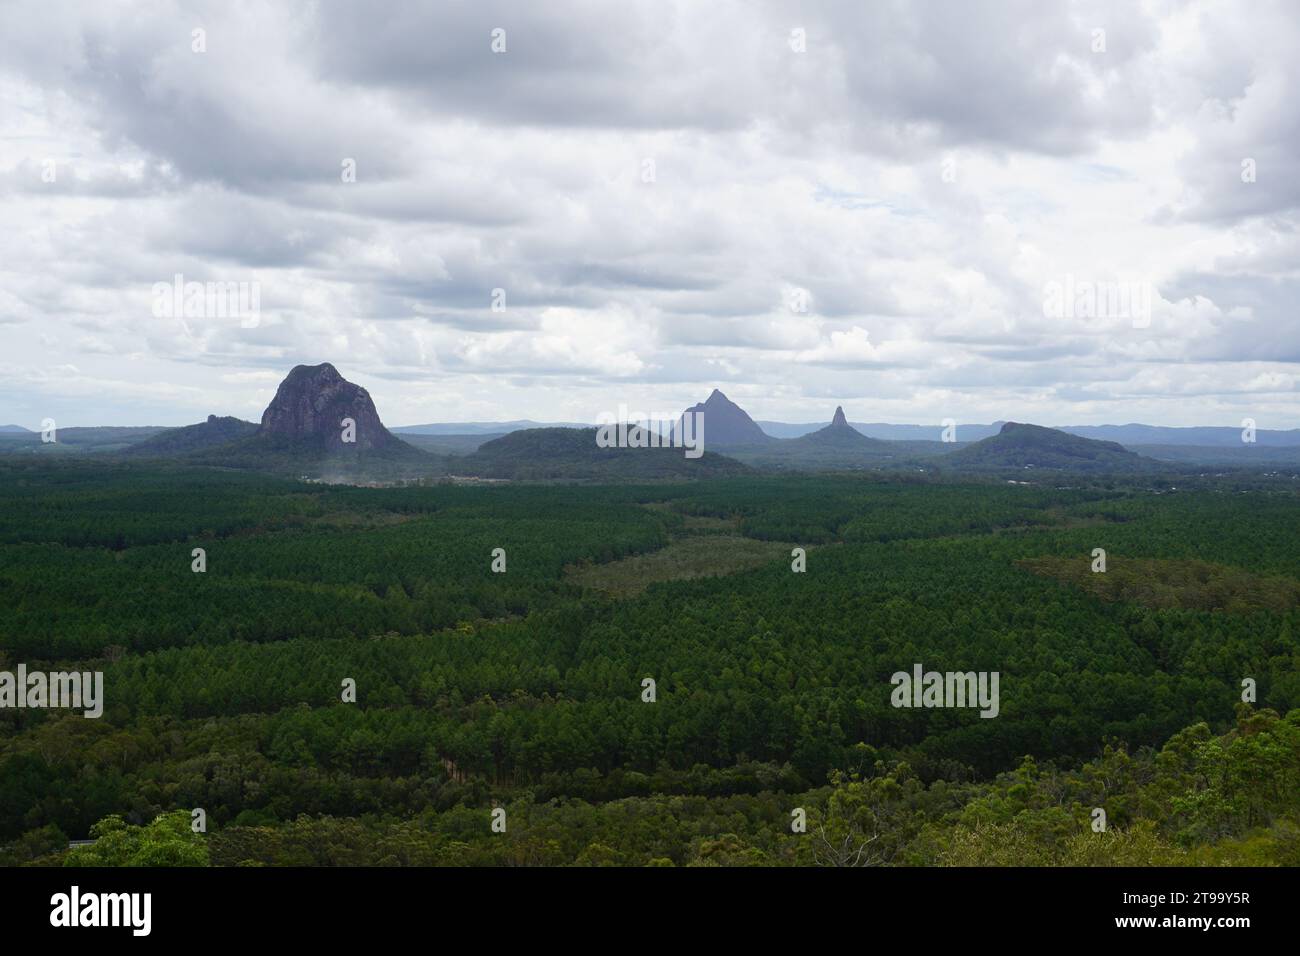 Vista panoramica del monte Beerwah e del monte Ngungun, ecc. dal punto panoramico Wild Horse Mountain Lookout nelle Glass House Mountains, Queensland, Australia Foto Stock